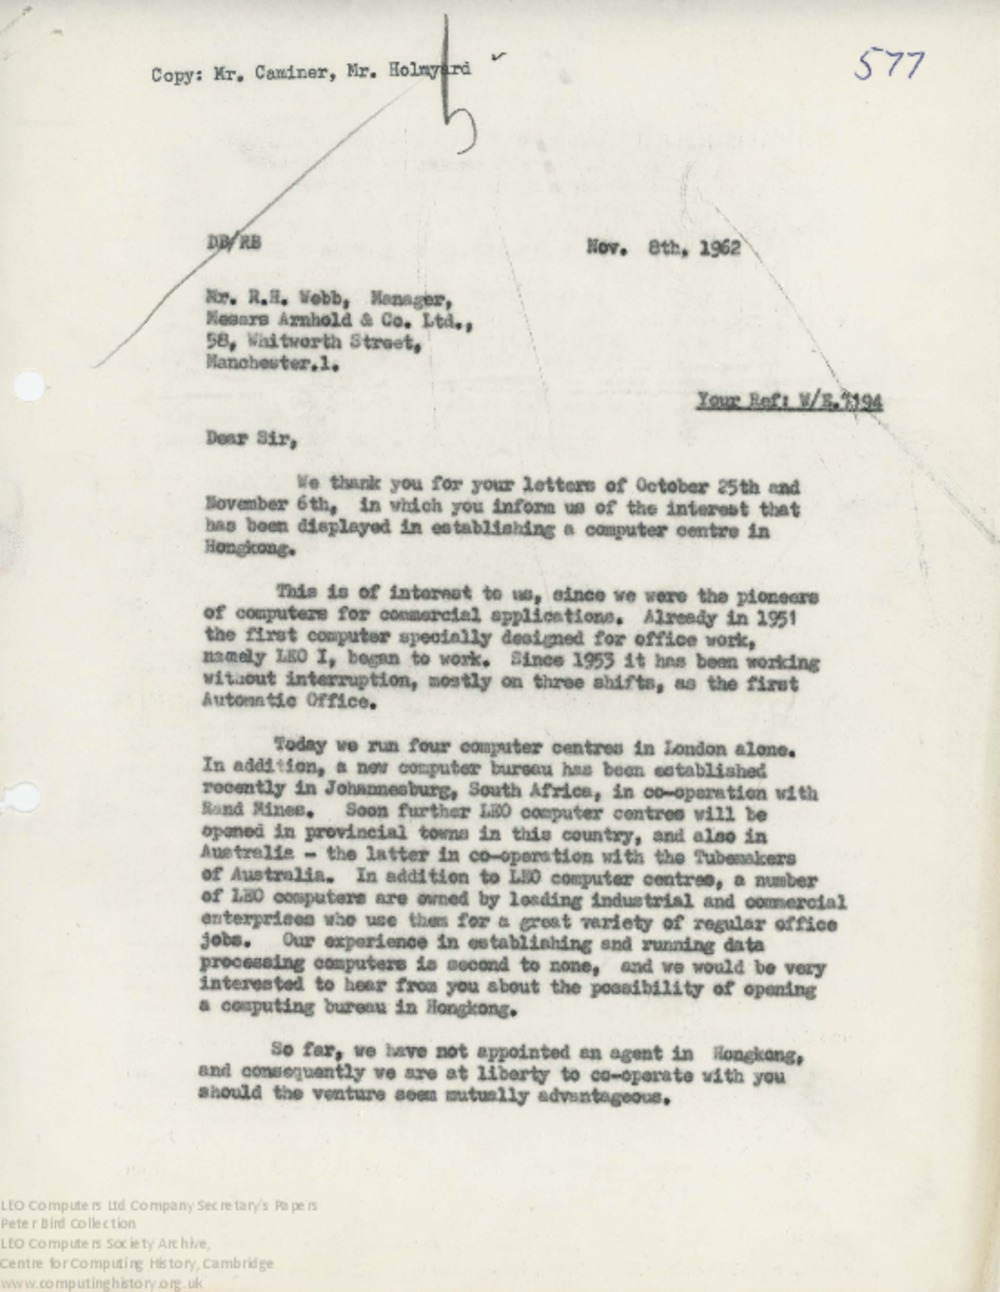 Article: 62873 Quotation for LEO III, Arnhold & Co Ltd, Hong Kong, 8th November 1962